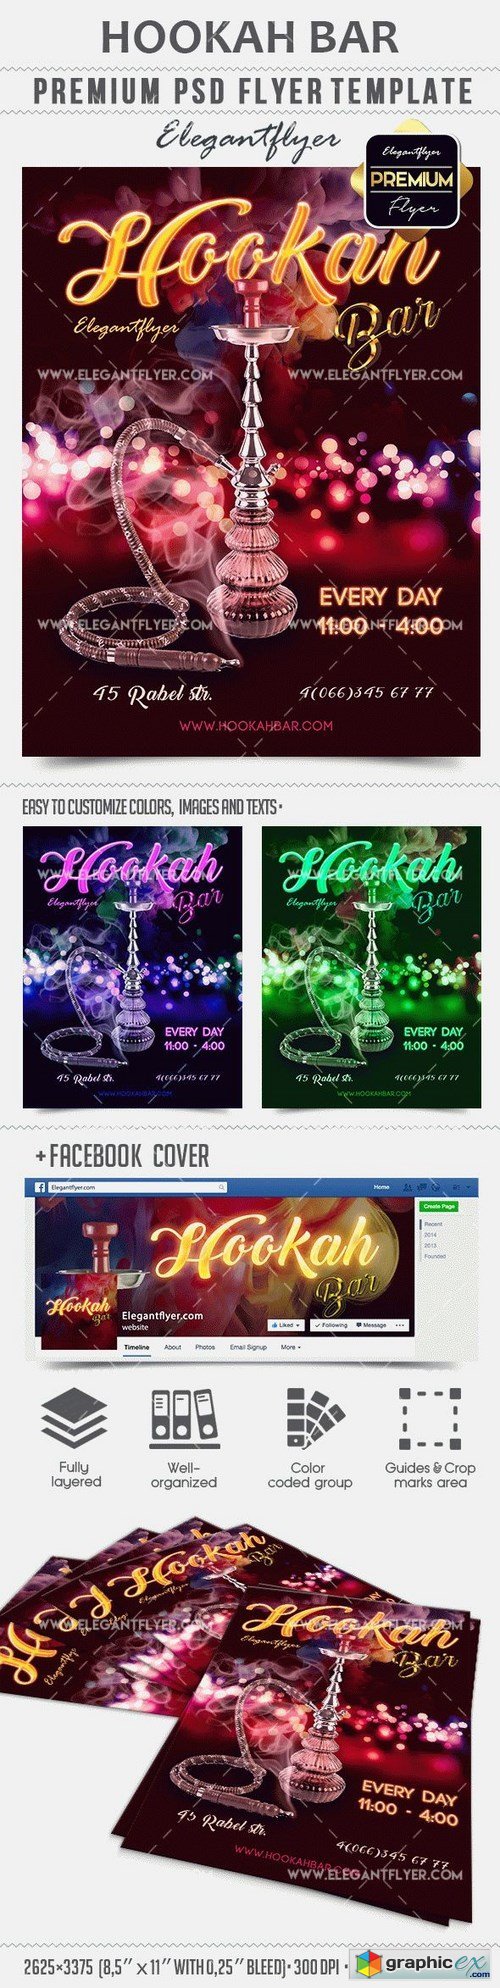 Hookah Bar  Premium PSD Template + Facebook cover